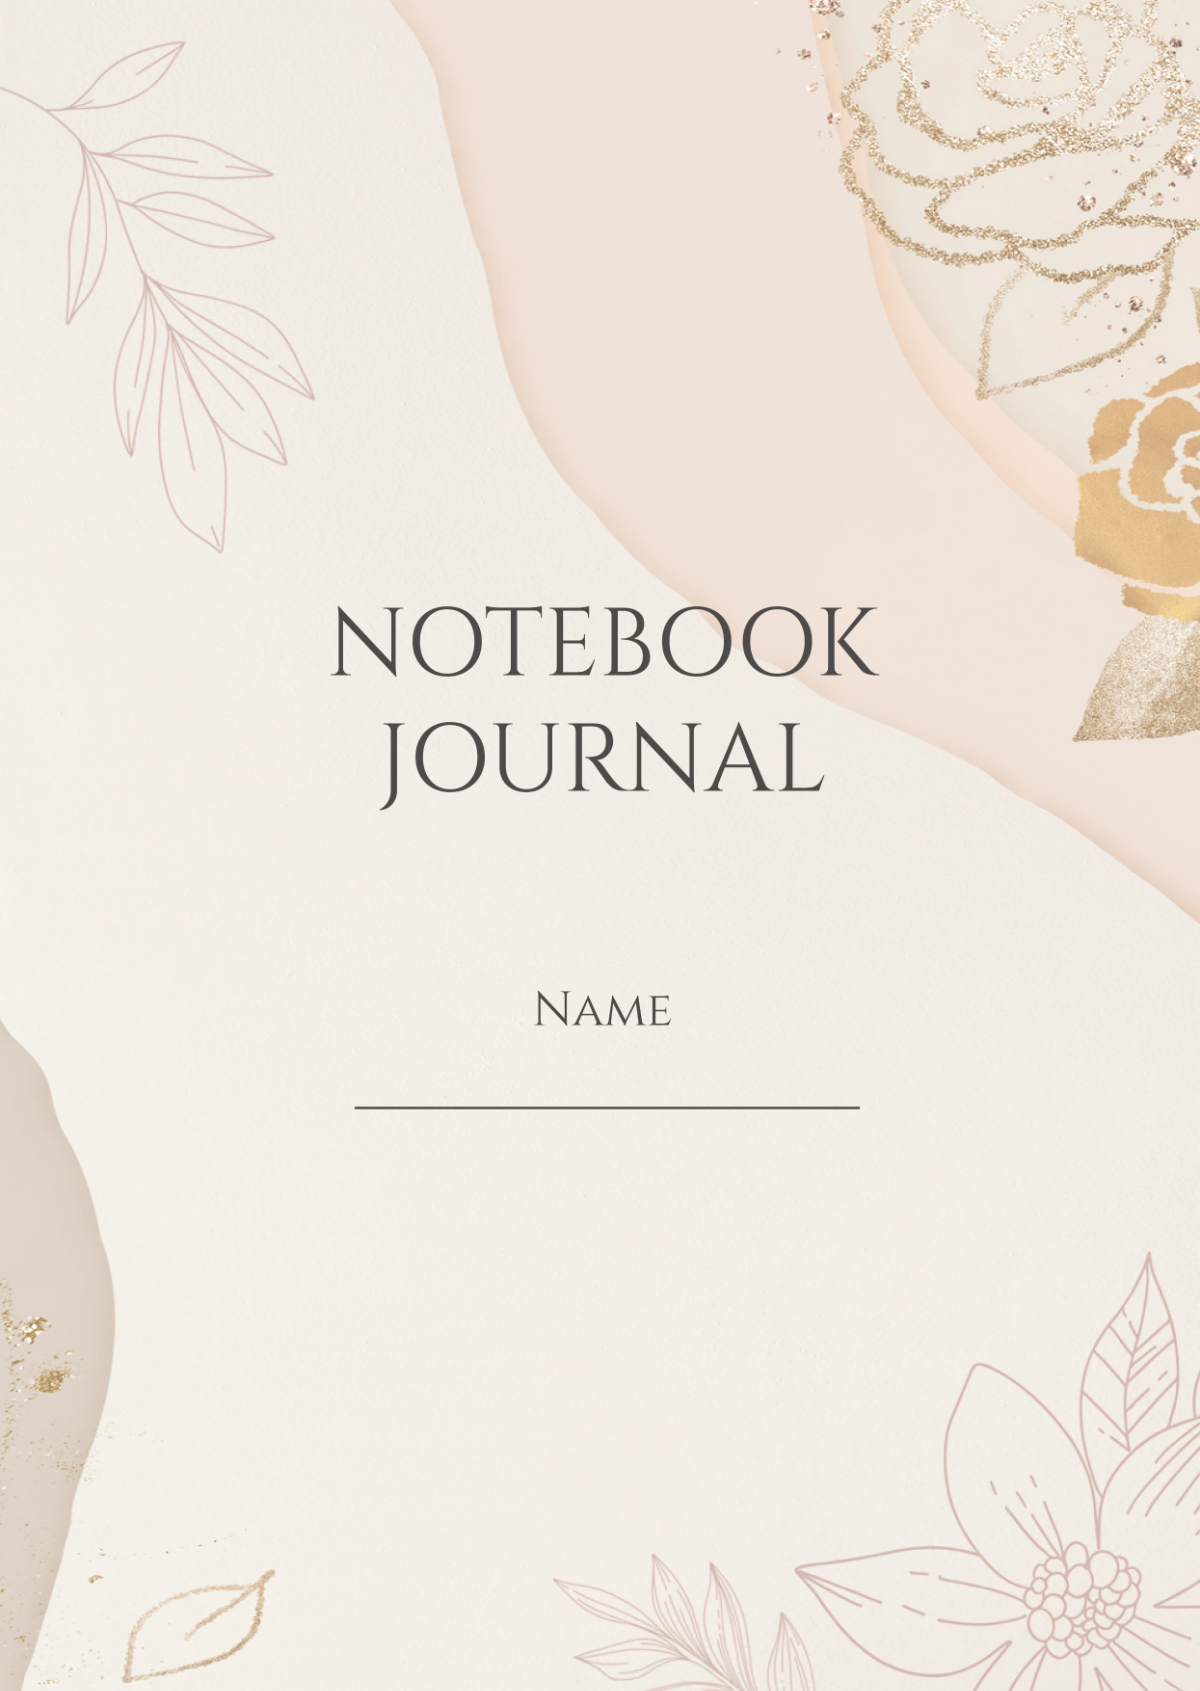 Aesthetic Notebook Journals Template